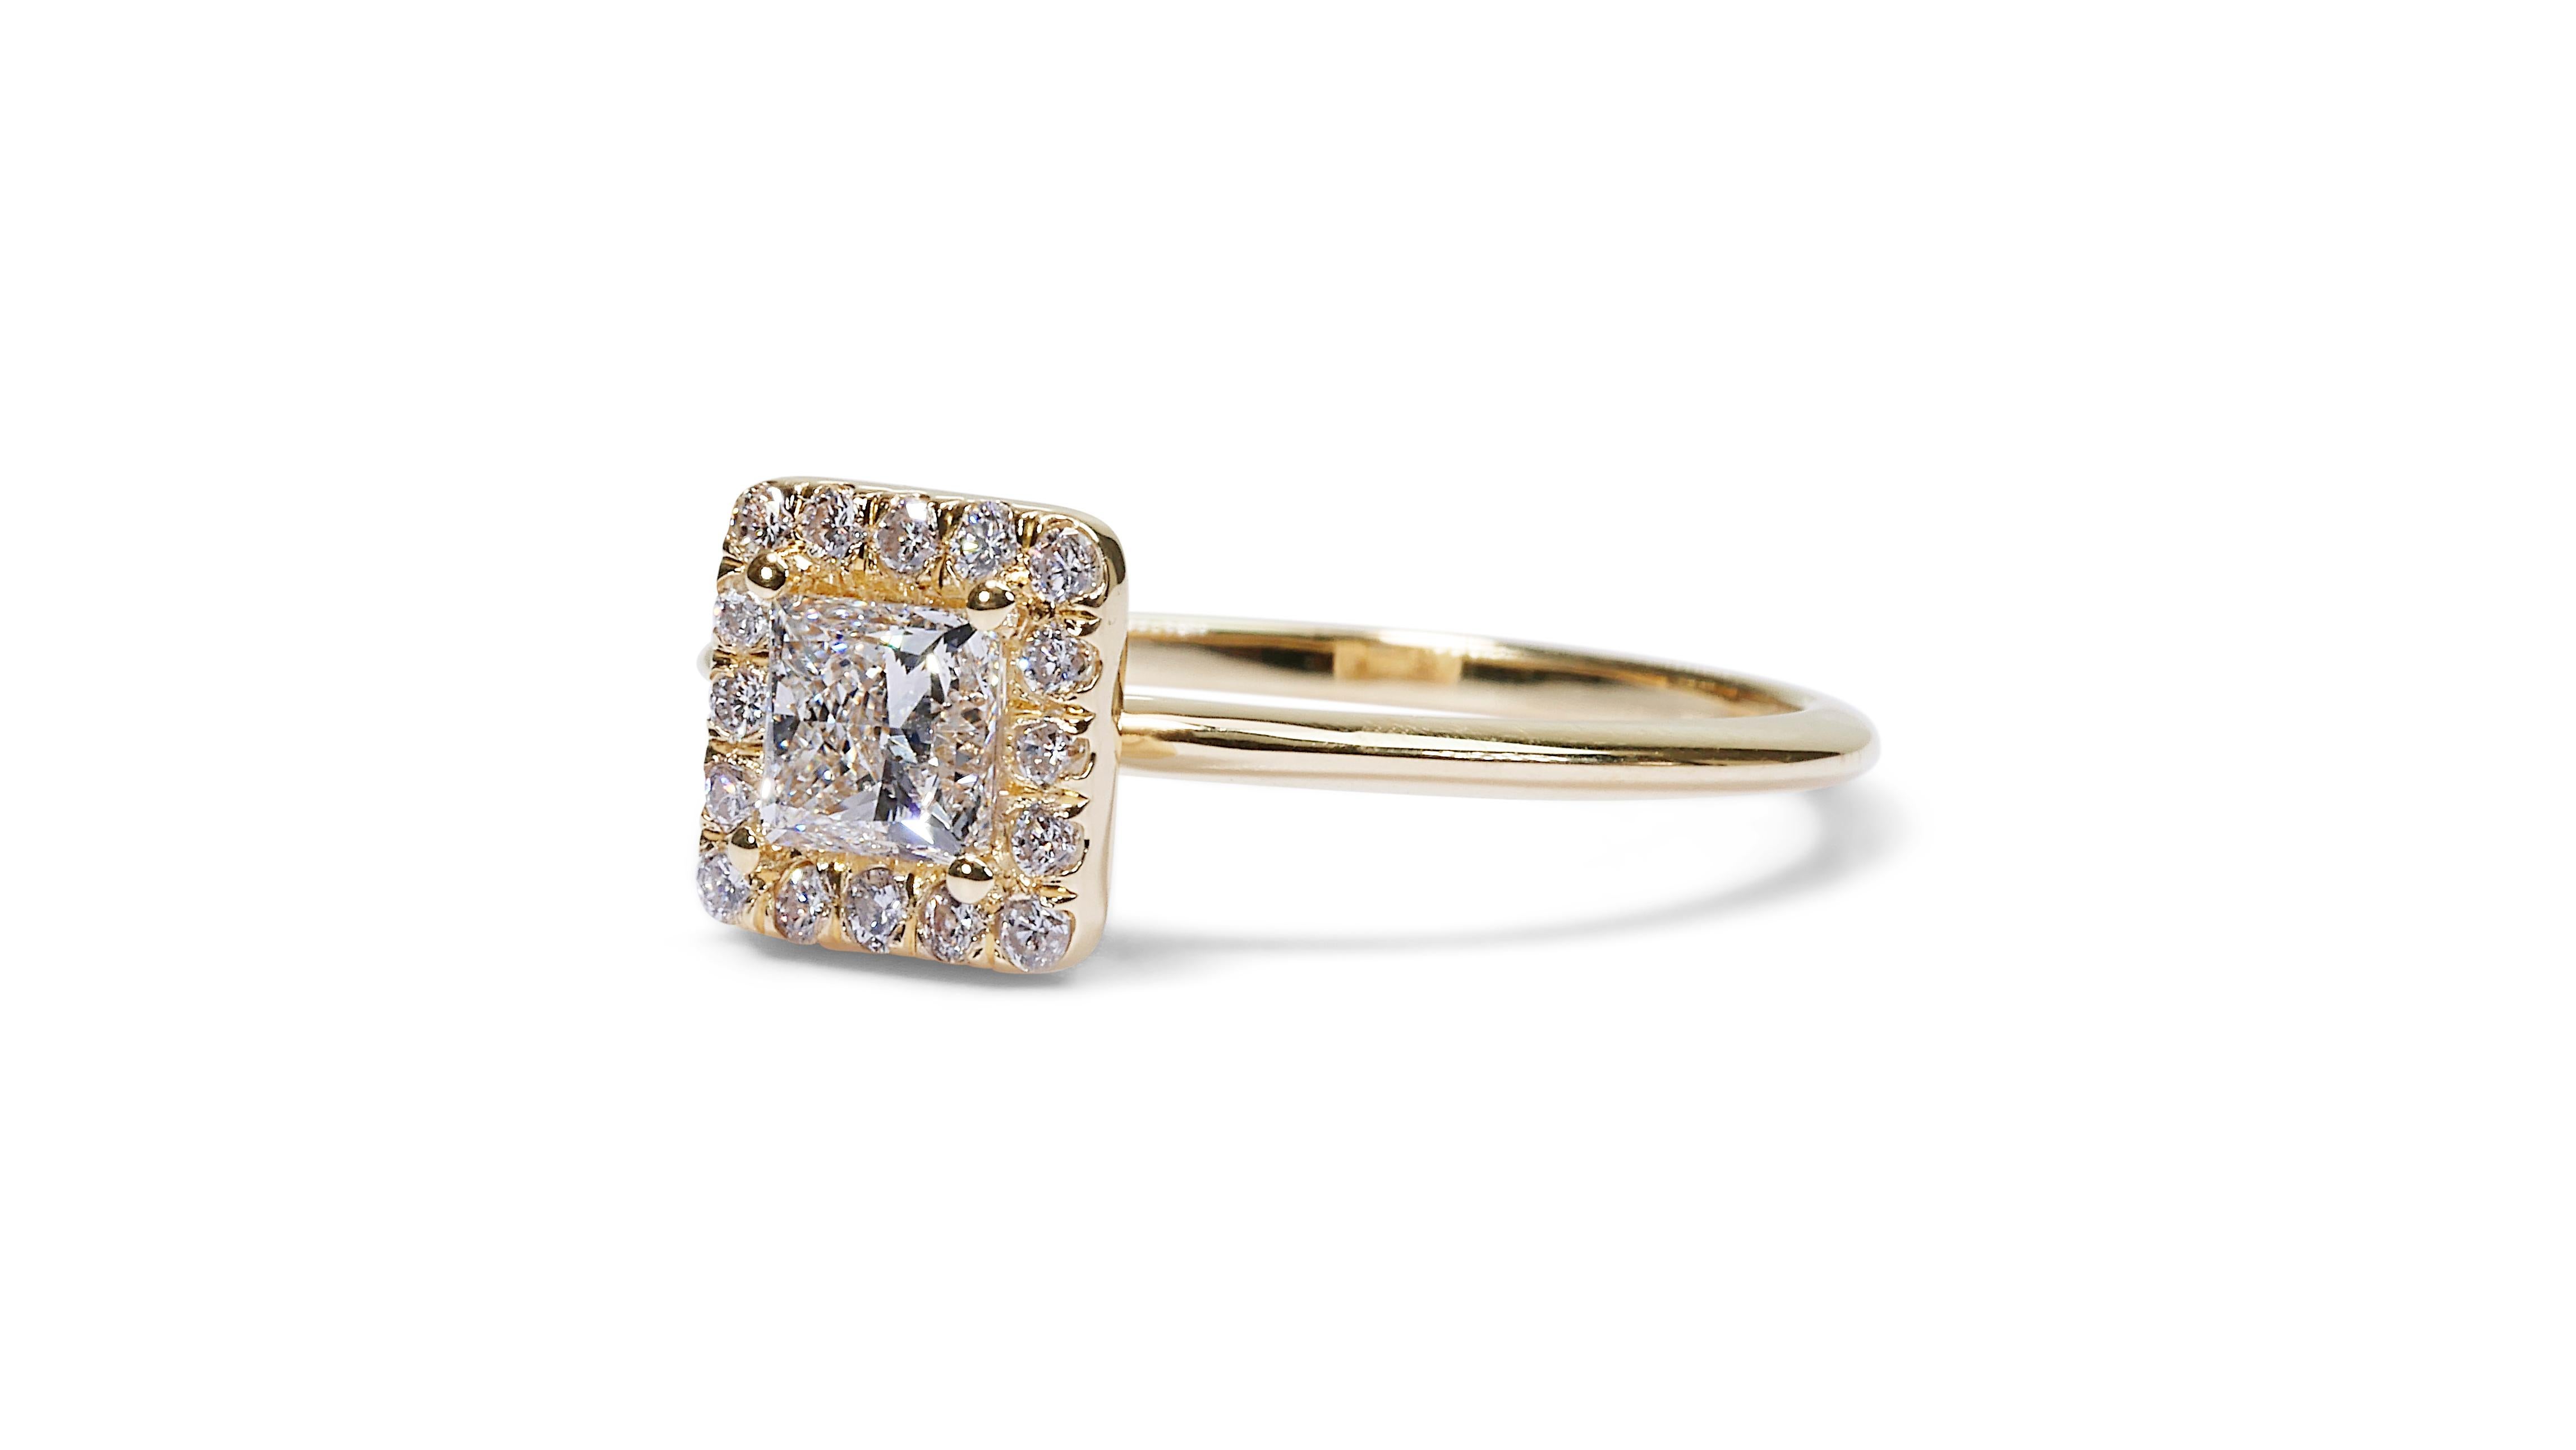 Taille carrée Charmante bague halo de diamants taille carrée de 0,90 carat en or jaune 18 carats, certifiée GIA en vente